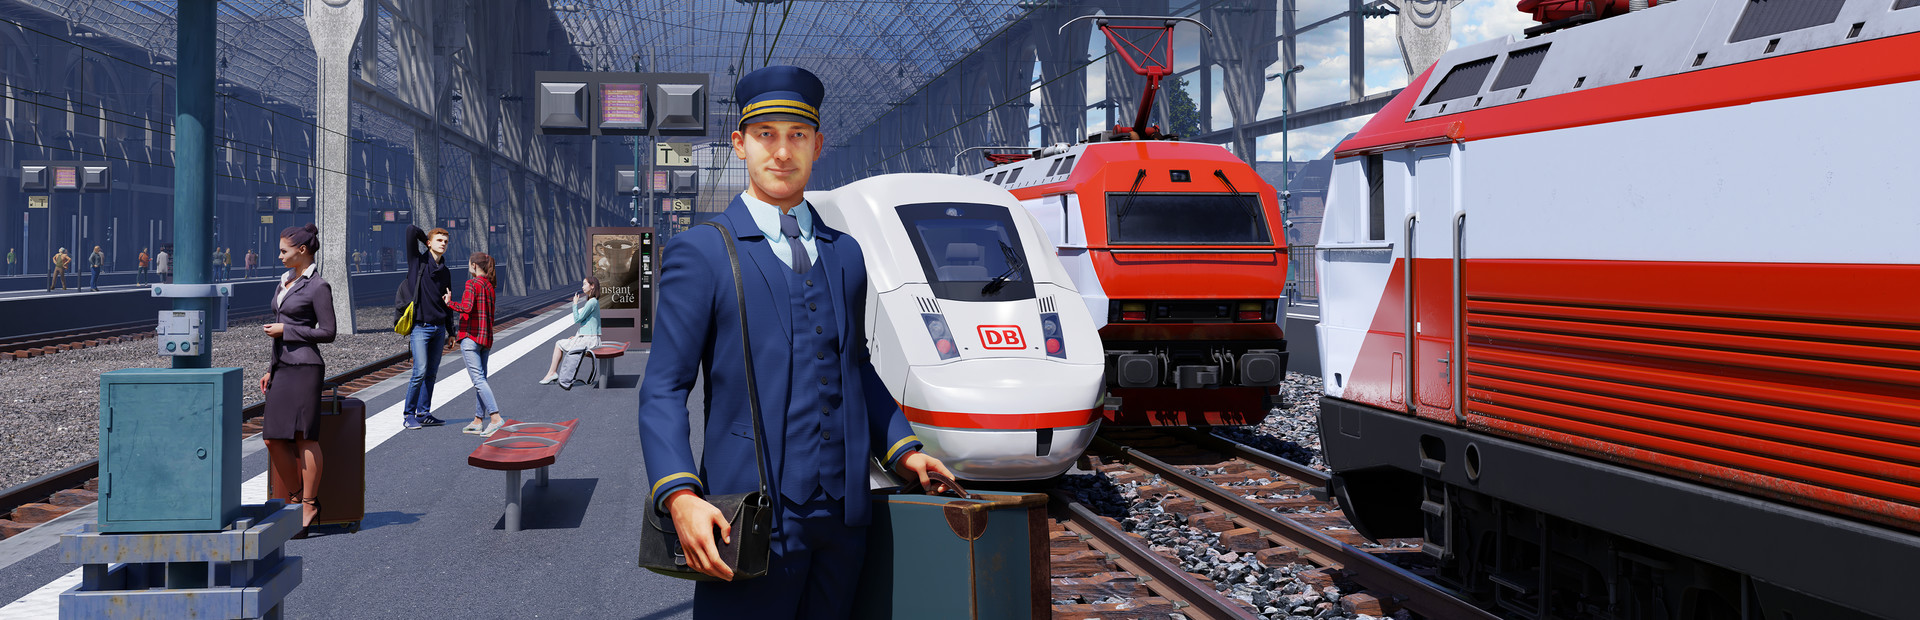 Train Life: A Railway Simulator cover image